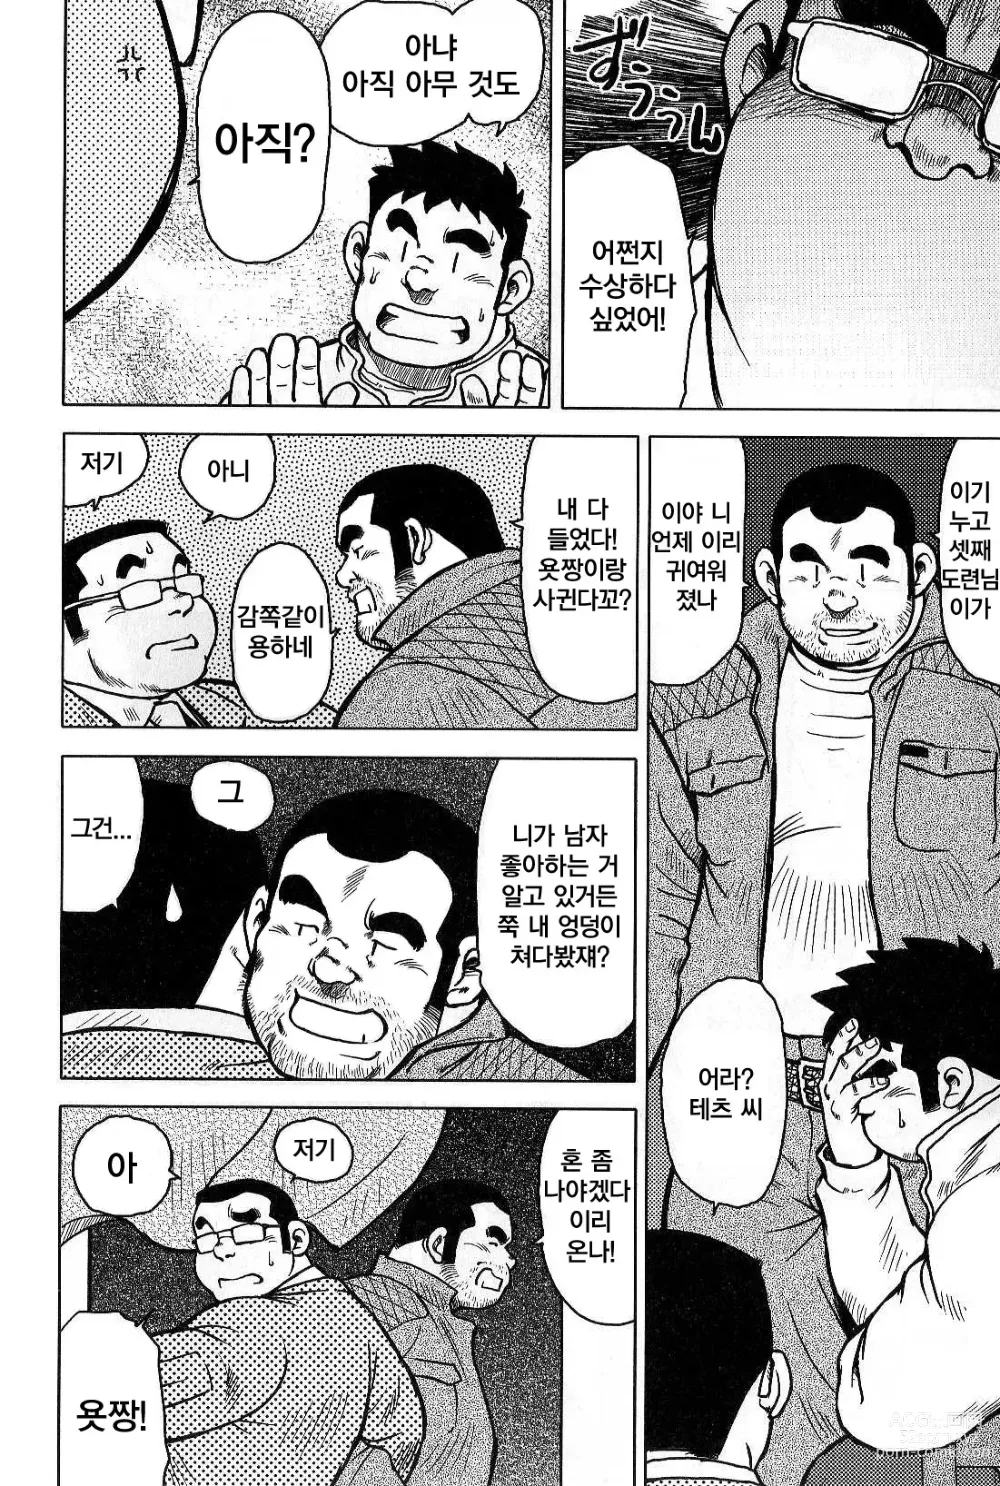 Page 216 of manga 시골의 접대